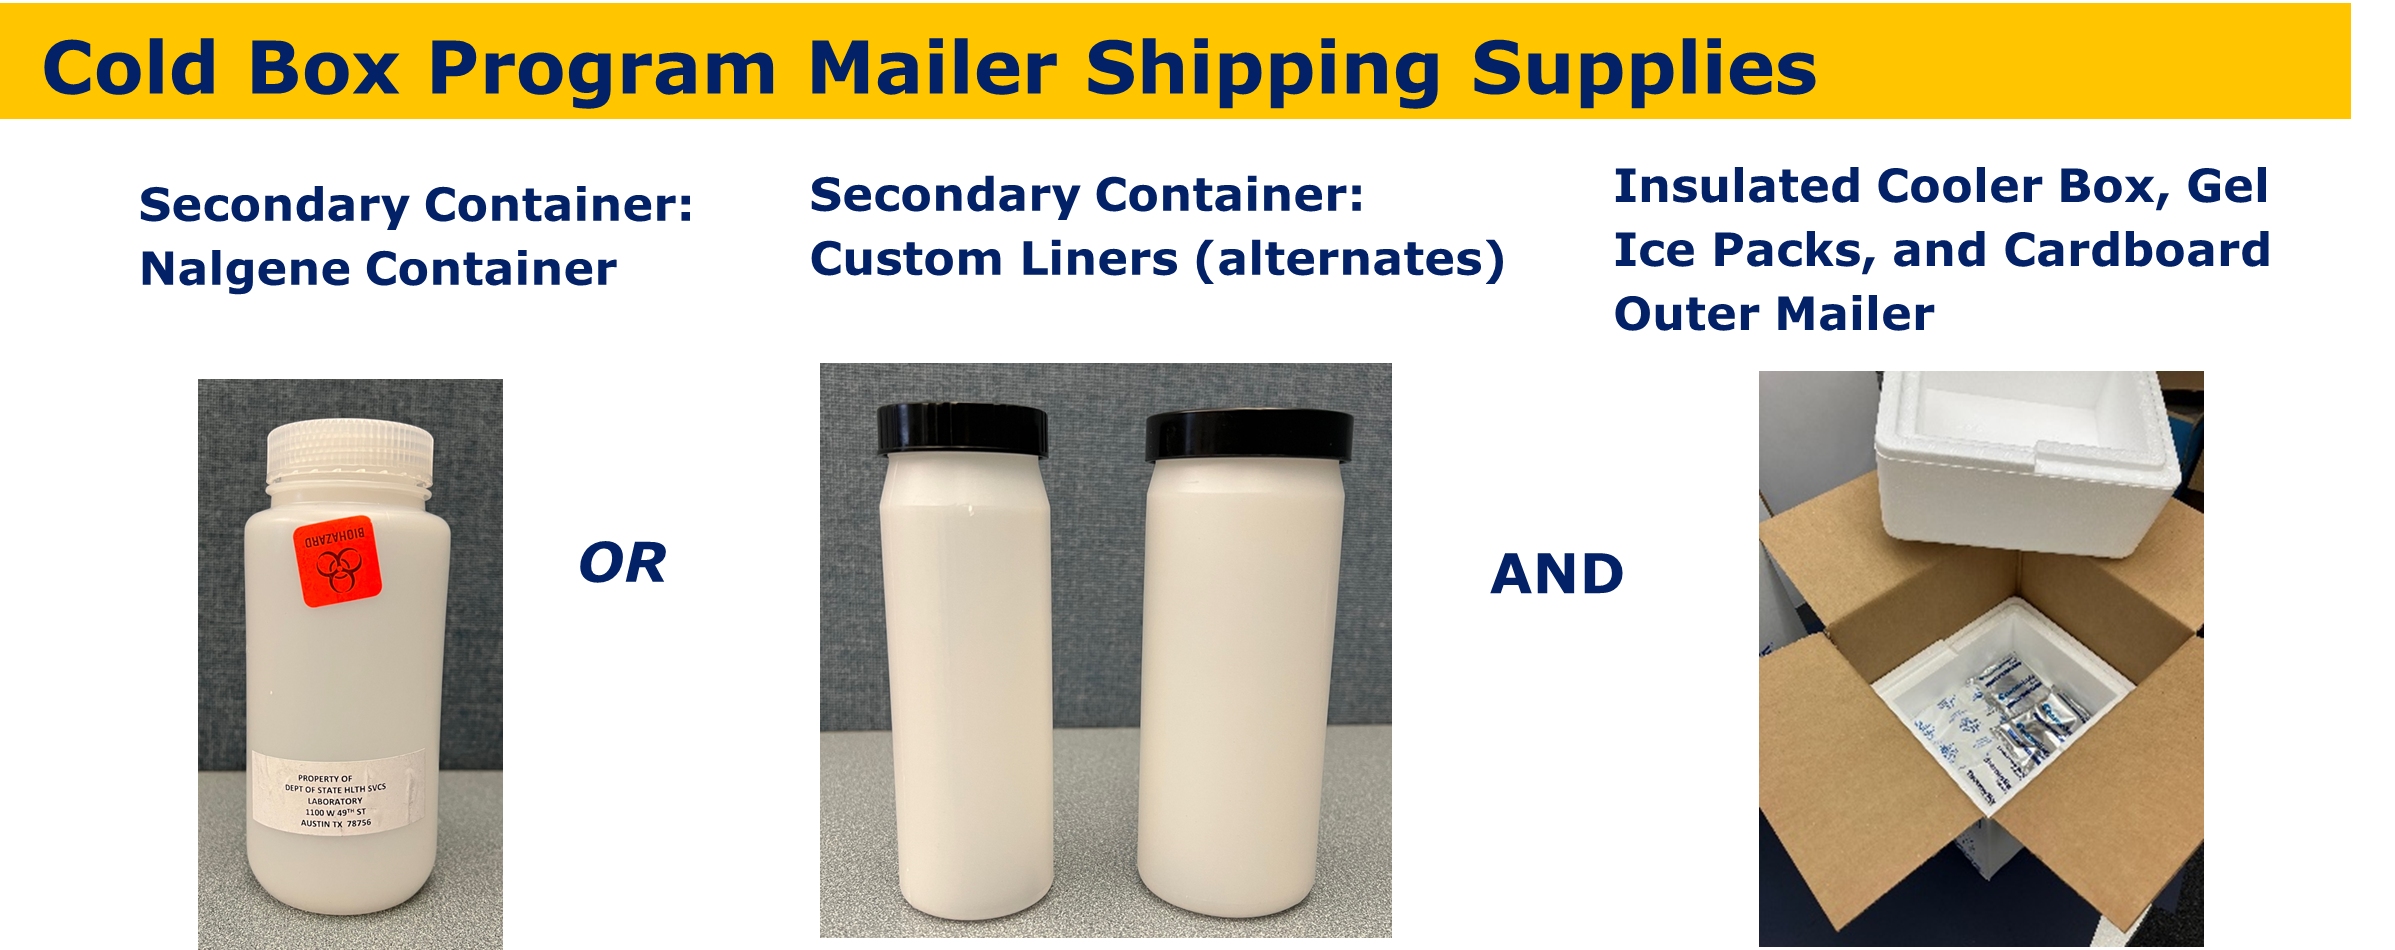 "Cold Box Program Mailer Shipping Supplies "